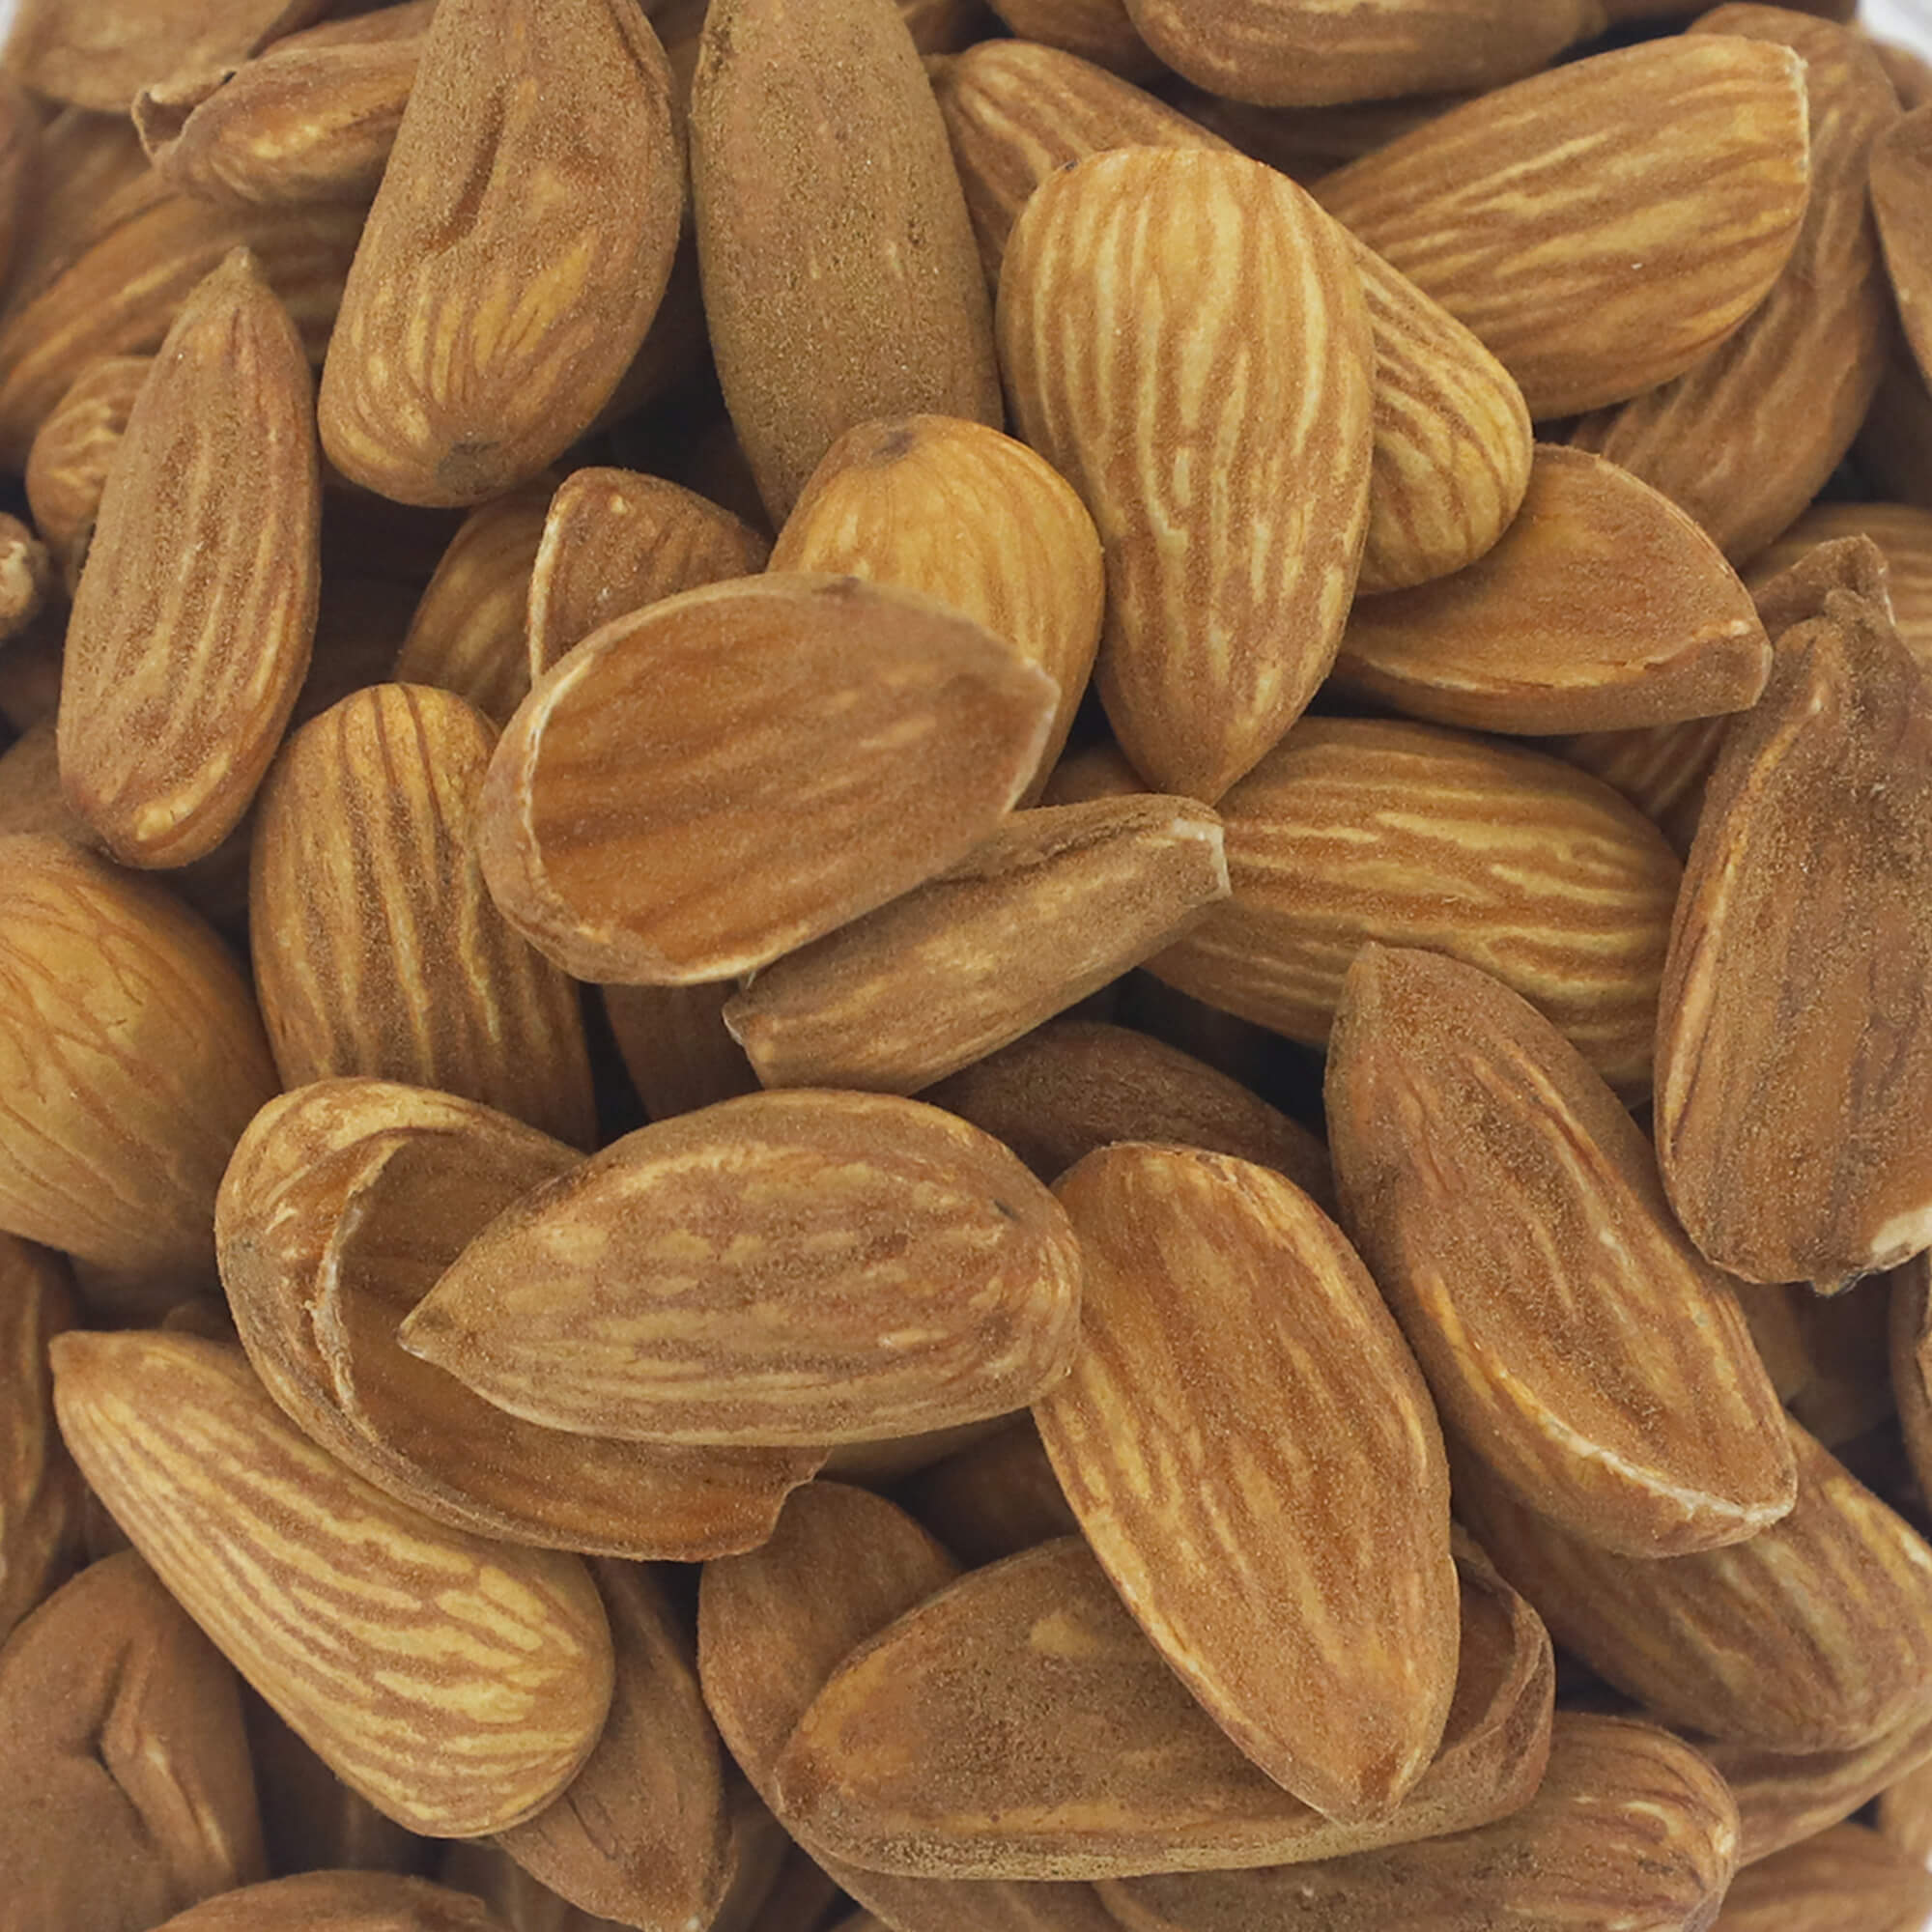 Nutex first grade Mamra almond kernels